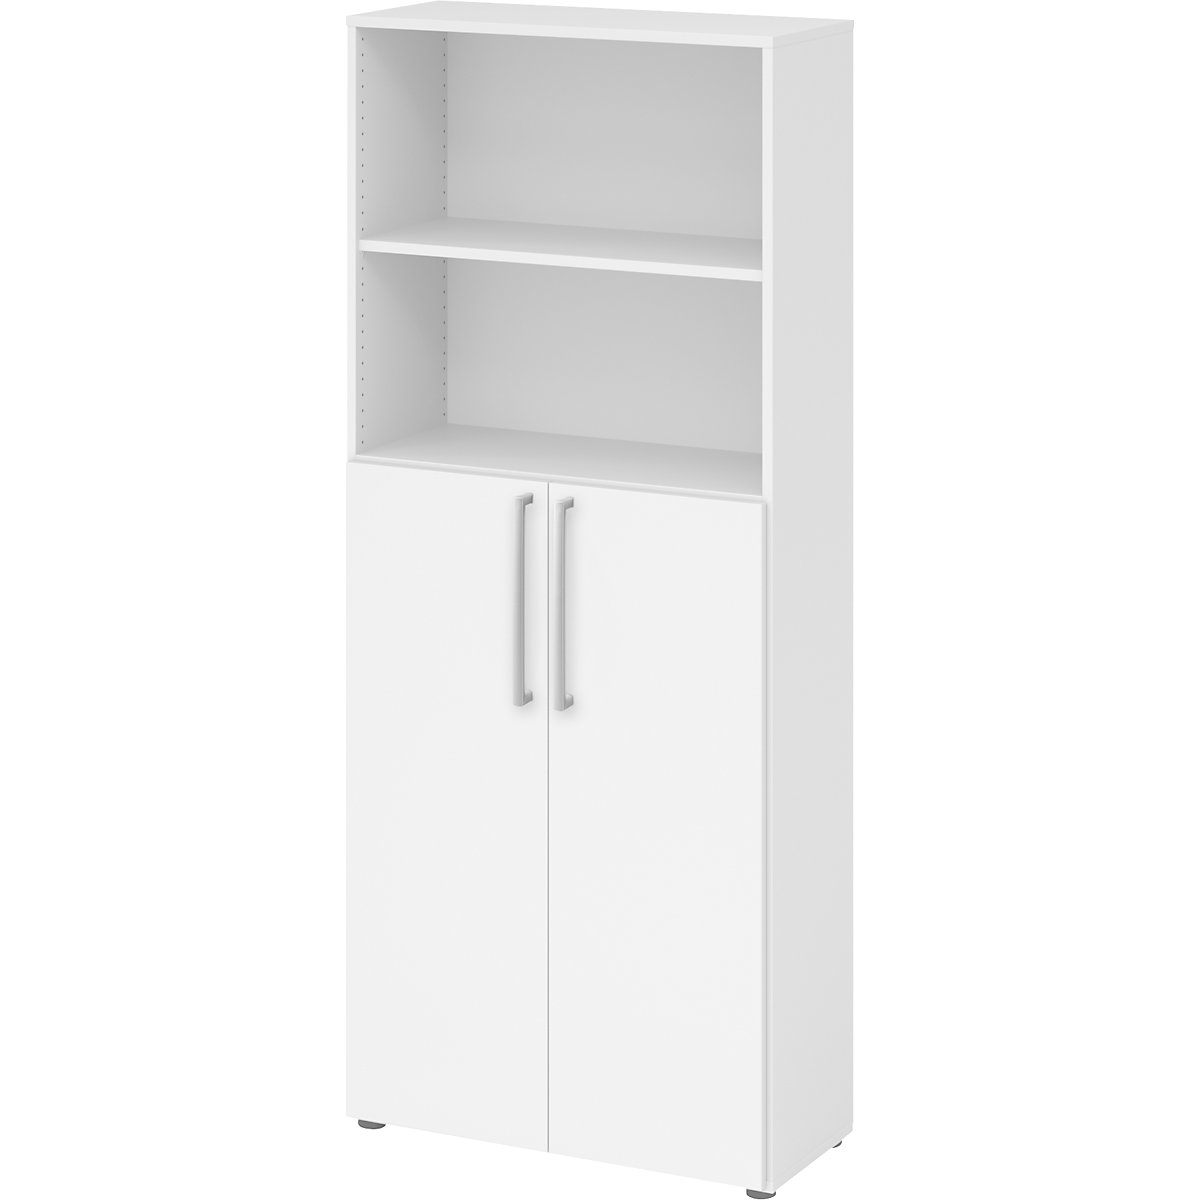 Shelf unit NICOLA – eurokraft pro, 4 shelves, 2 open compartments, white-7